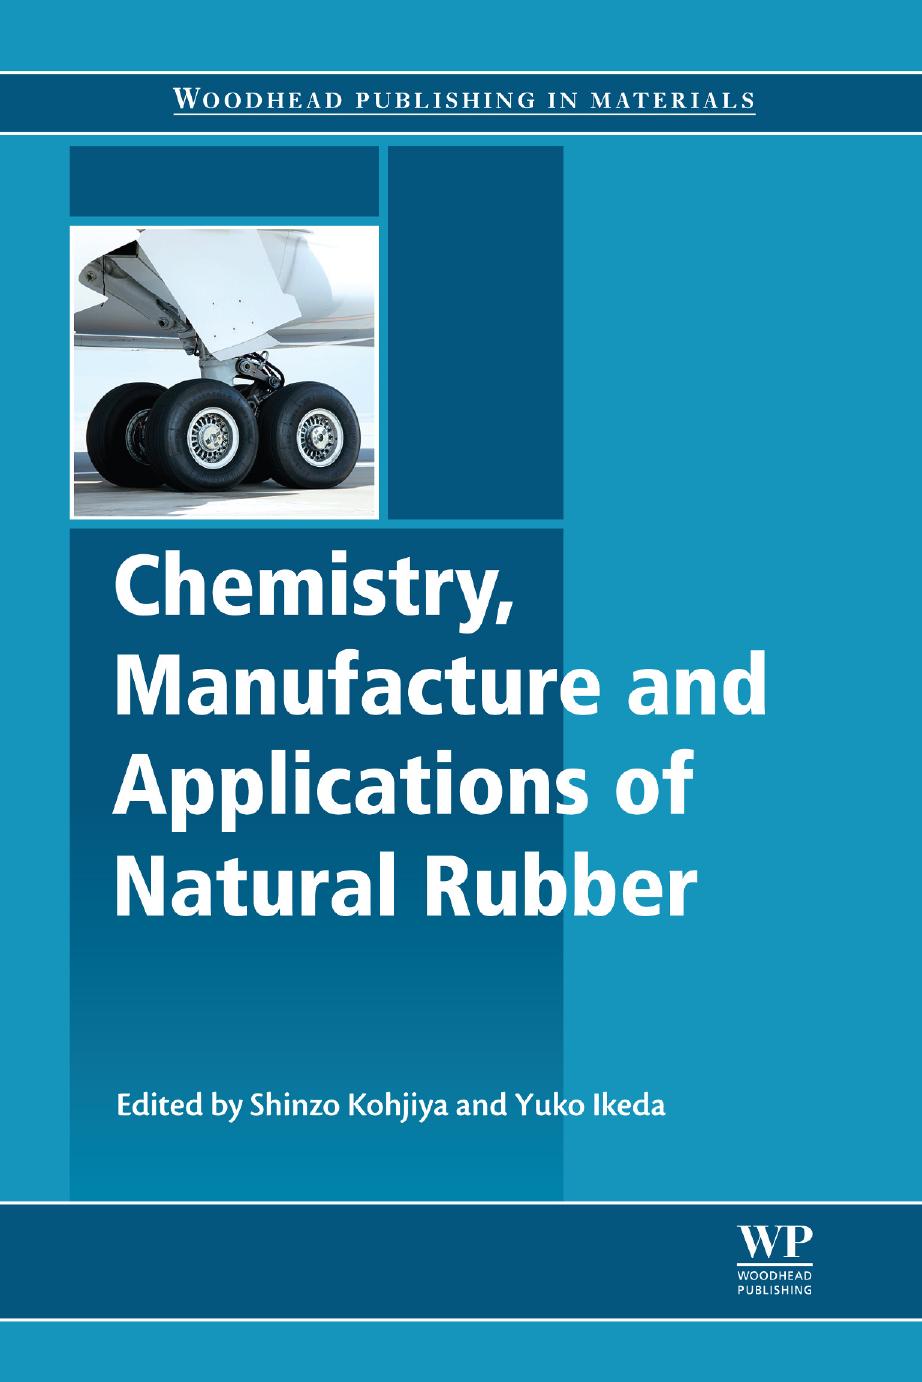 Chemistry, Manufacture and Applications of Natural Rubber by Shinzo Kohjiya & Yuko Ikeda